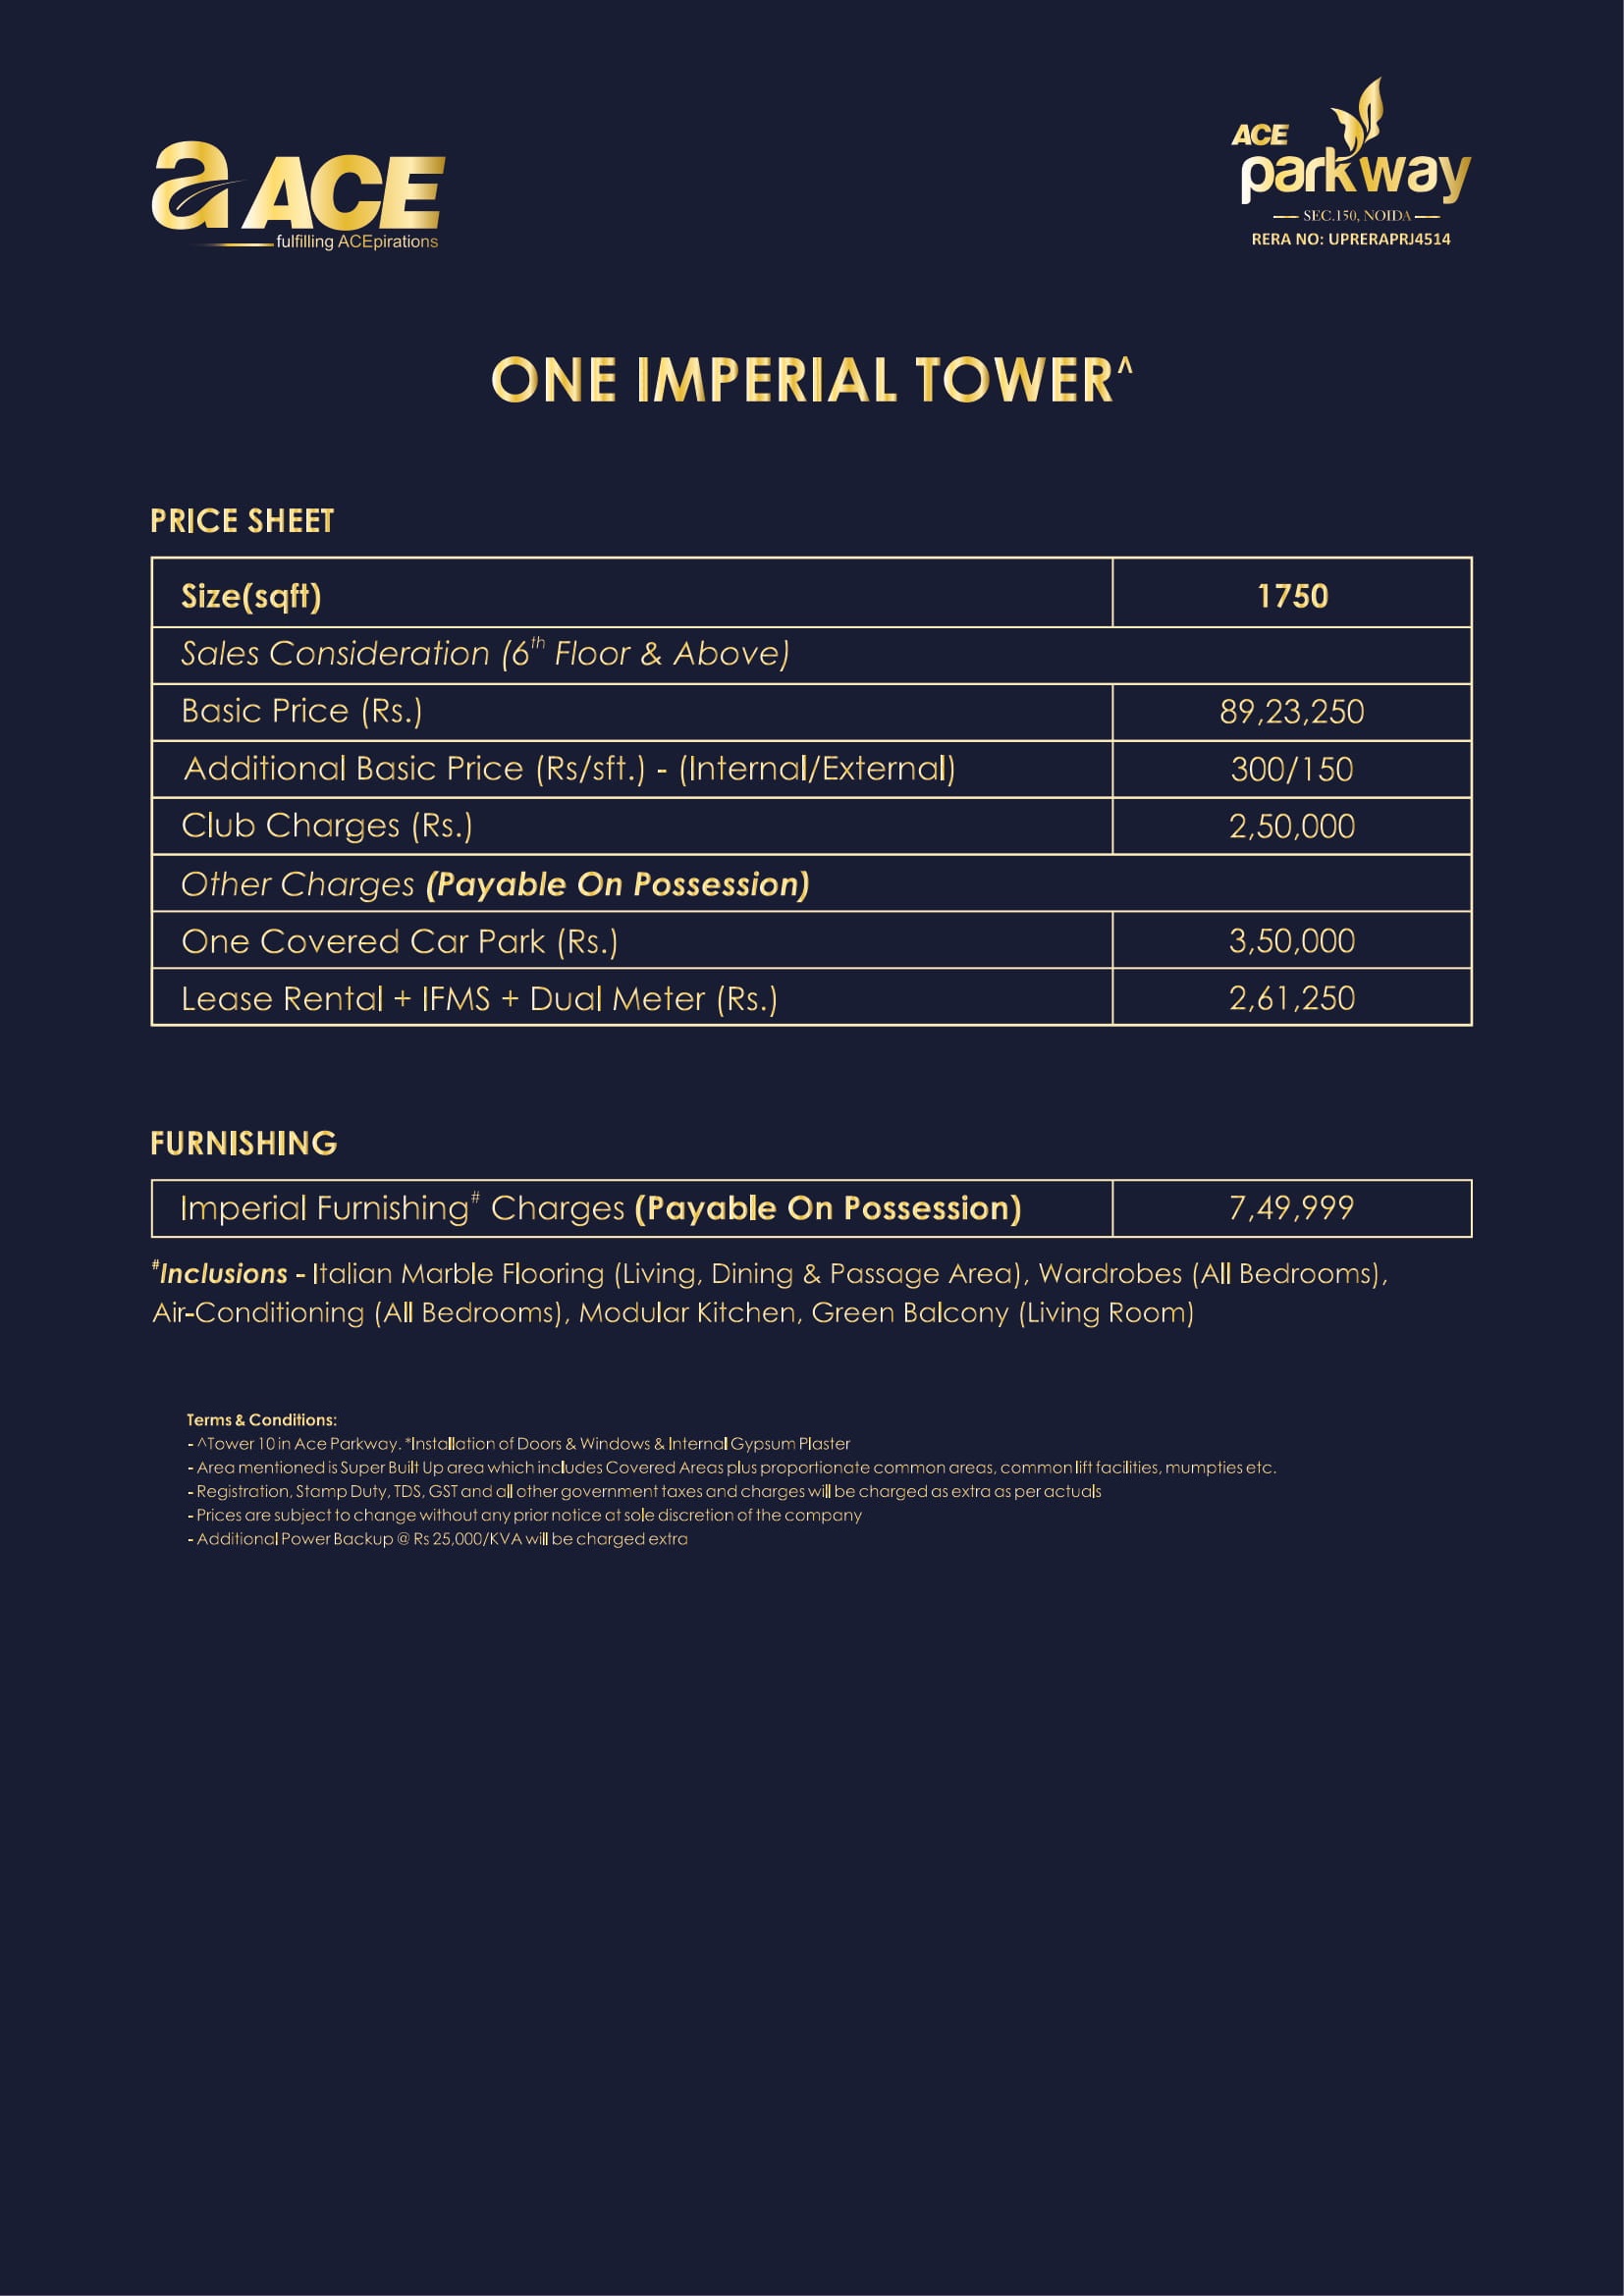 MjAyMC0wMS0xMCAwMzo1NDoyMg==_One-Imperial-Tower-Parkway-Price-Sheet.jpg